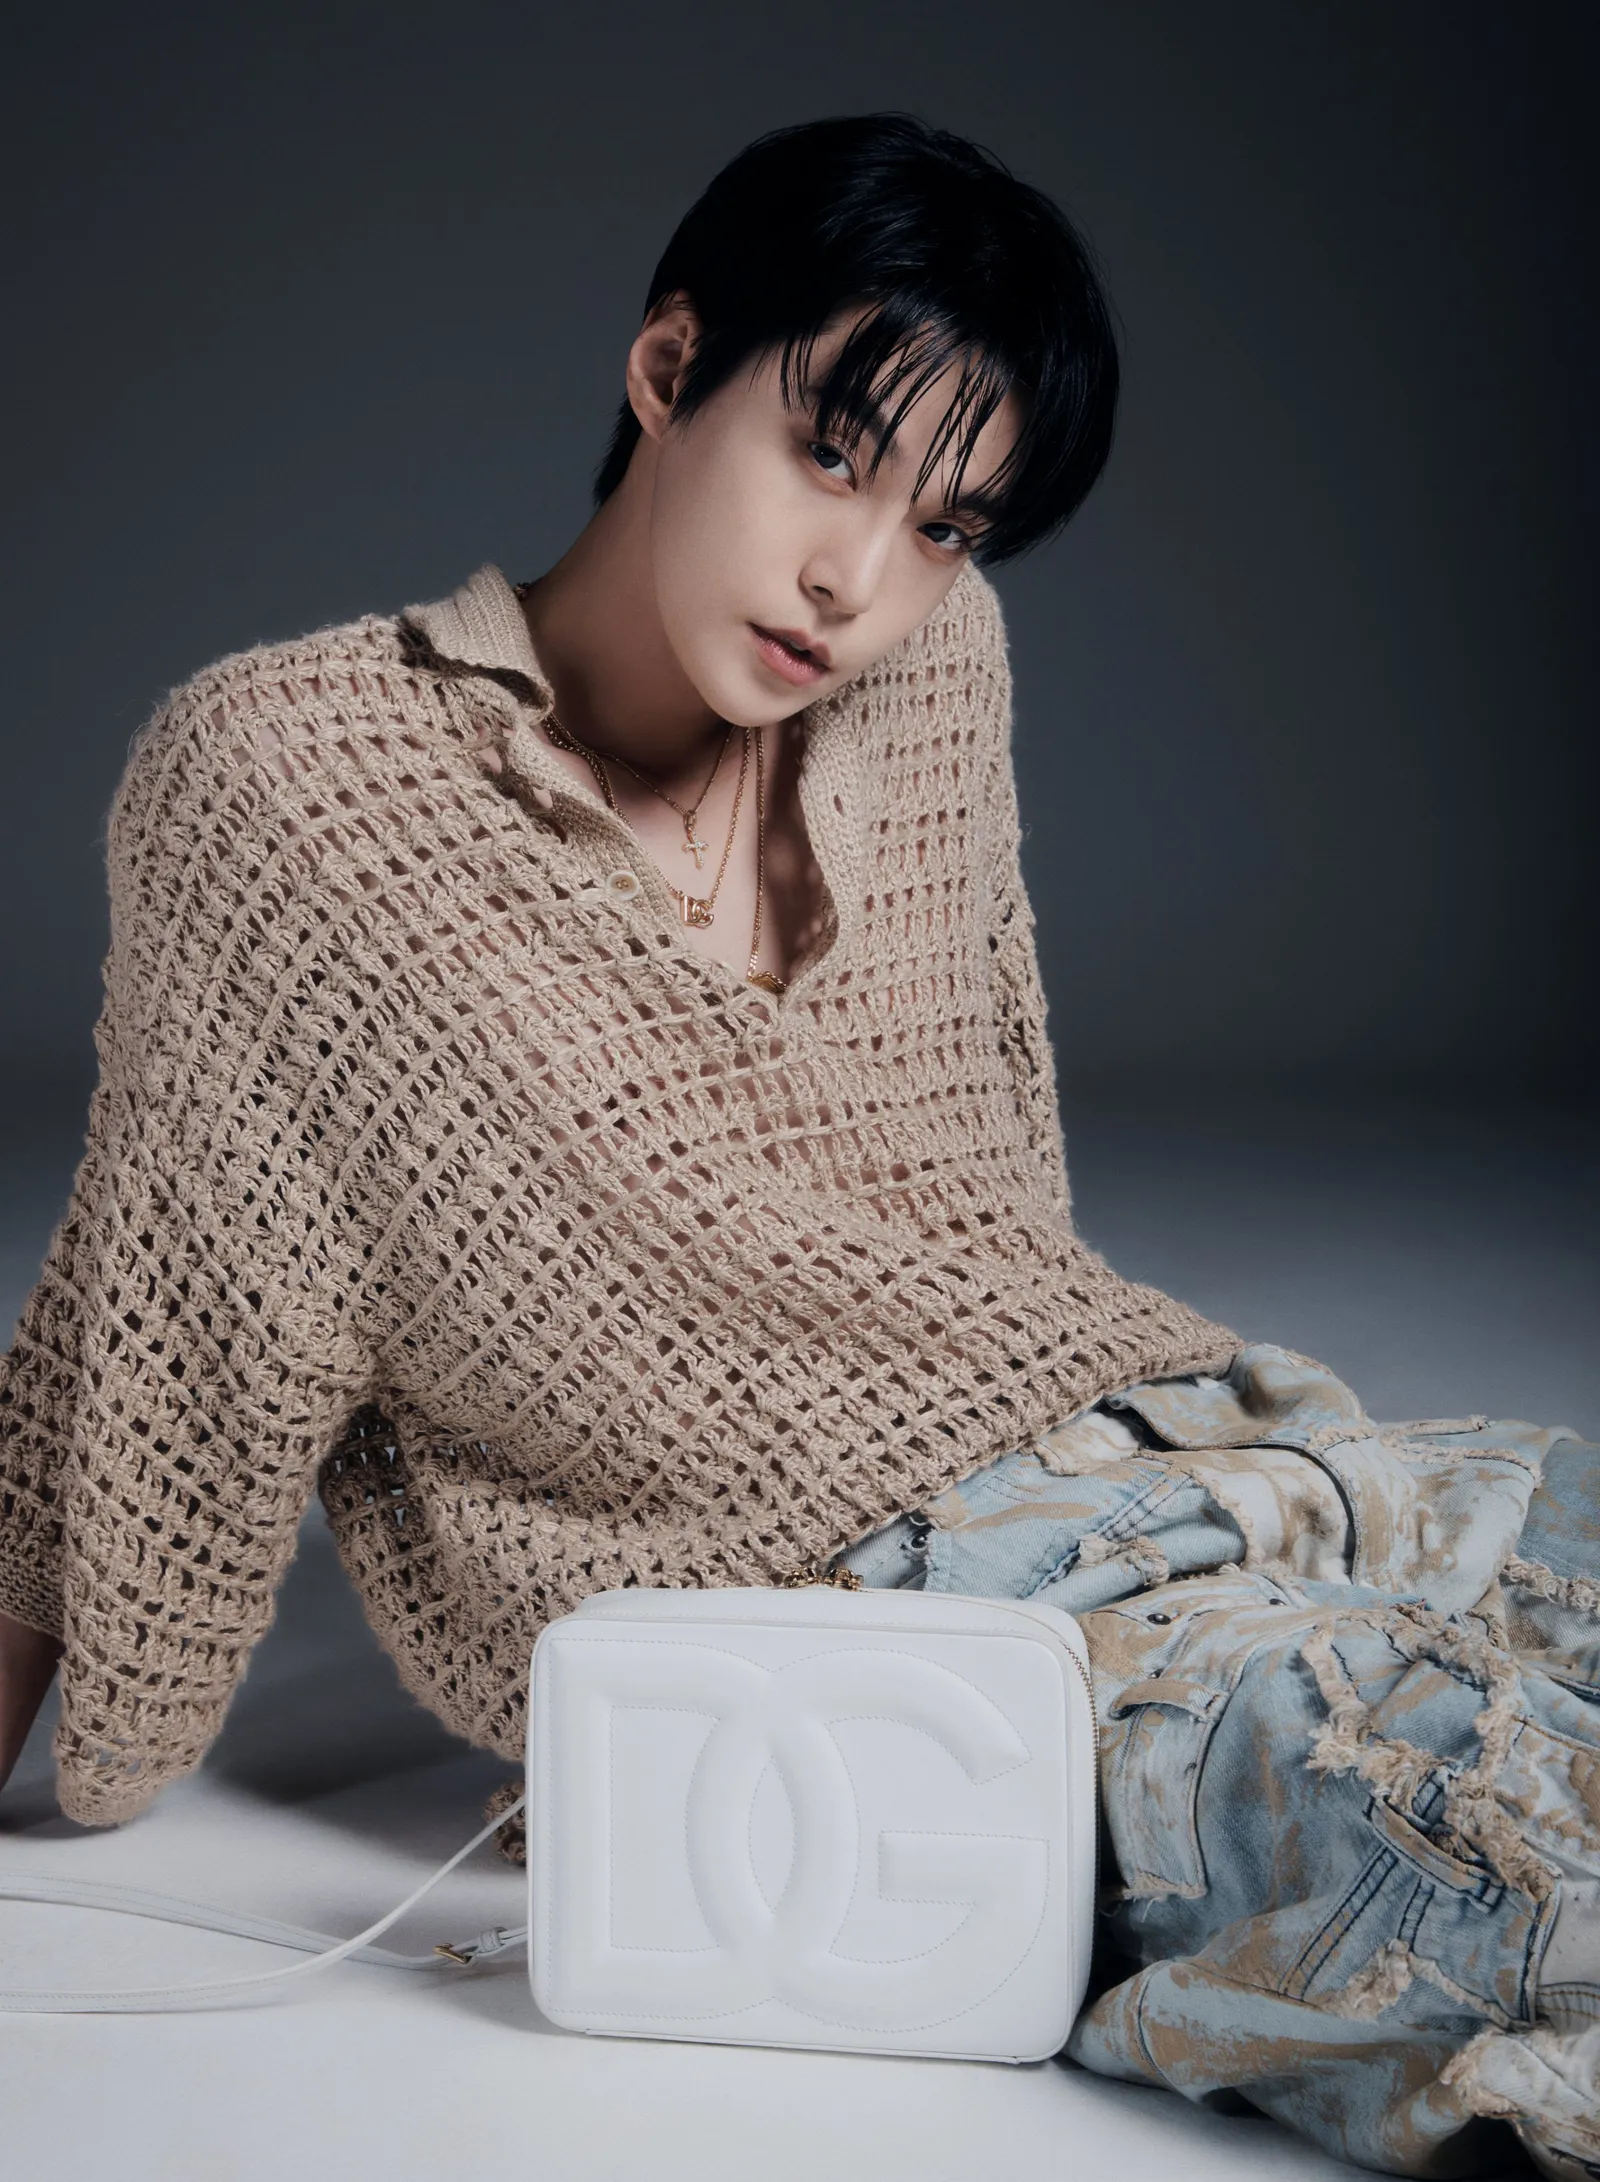 Doyoung ‘NCT’ Resmi Jadi Brand Ambassador Dolce & Gabbana